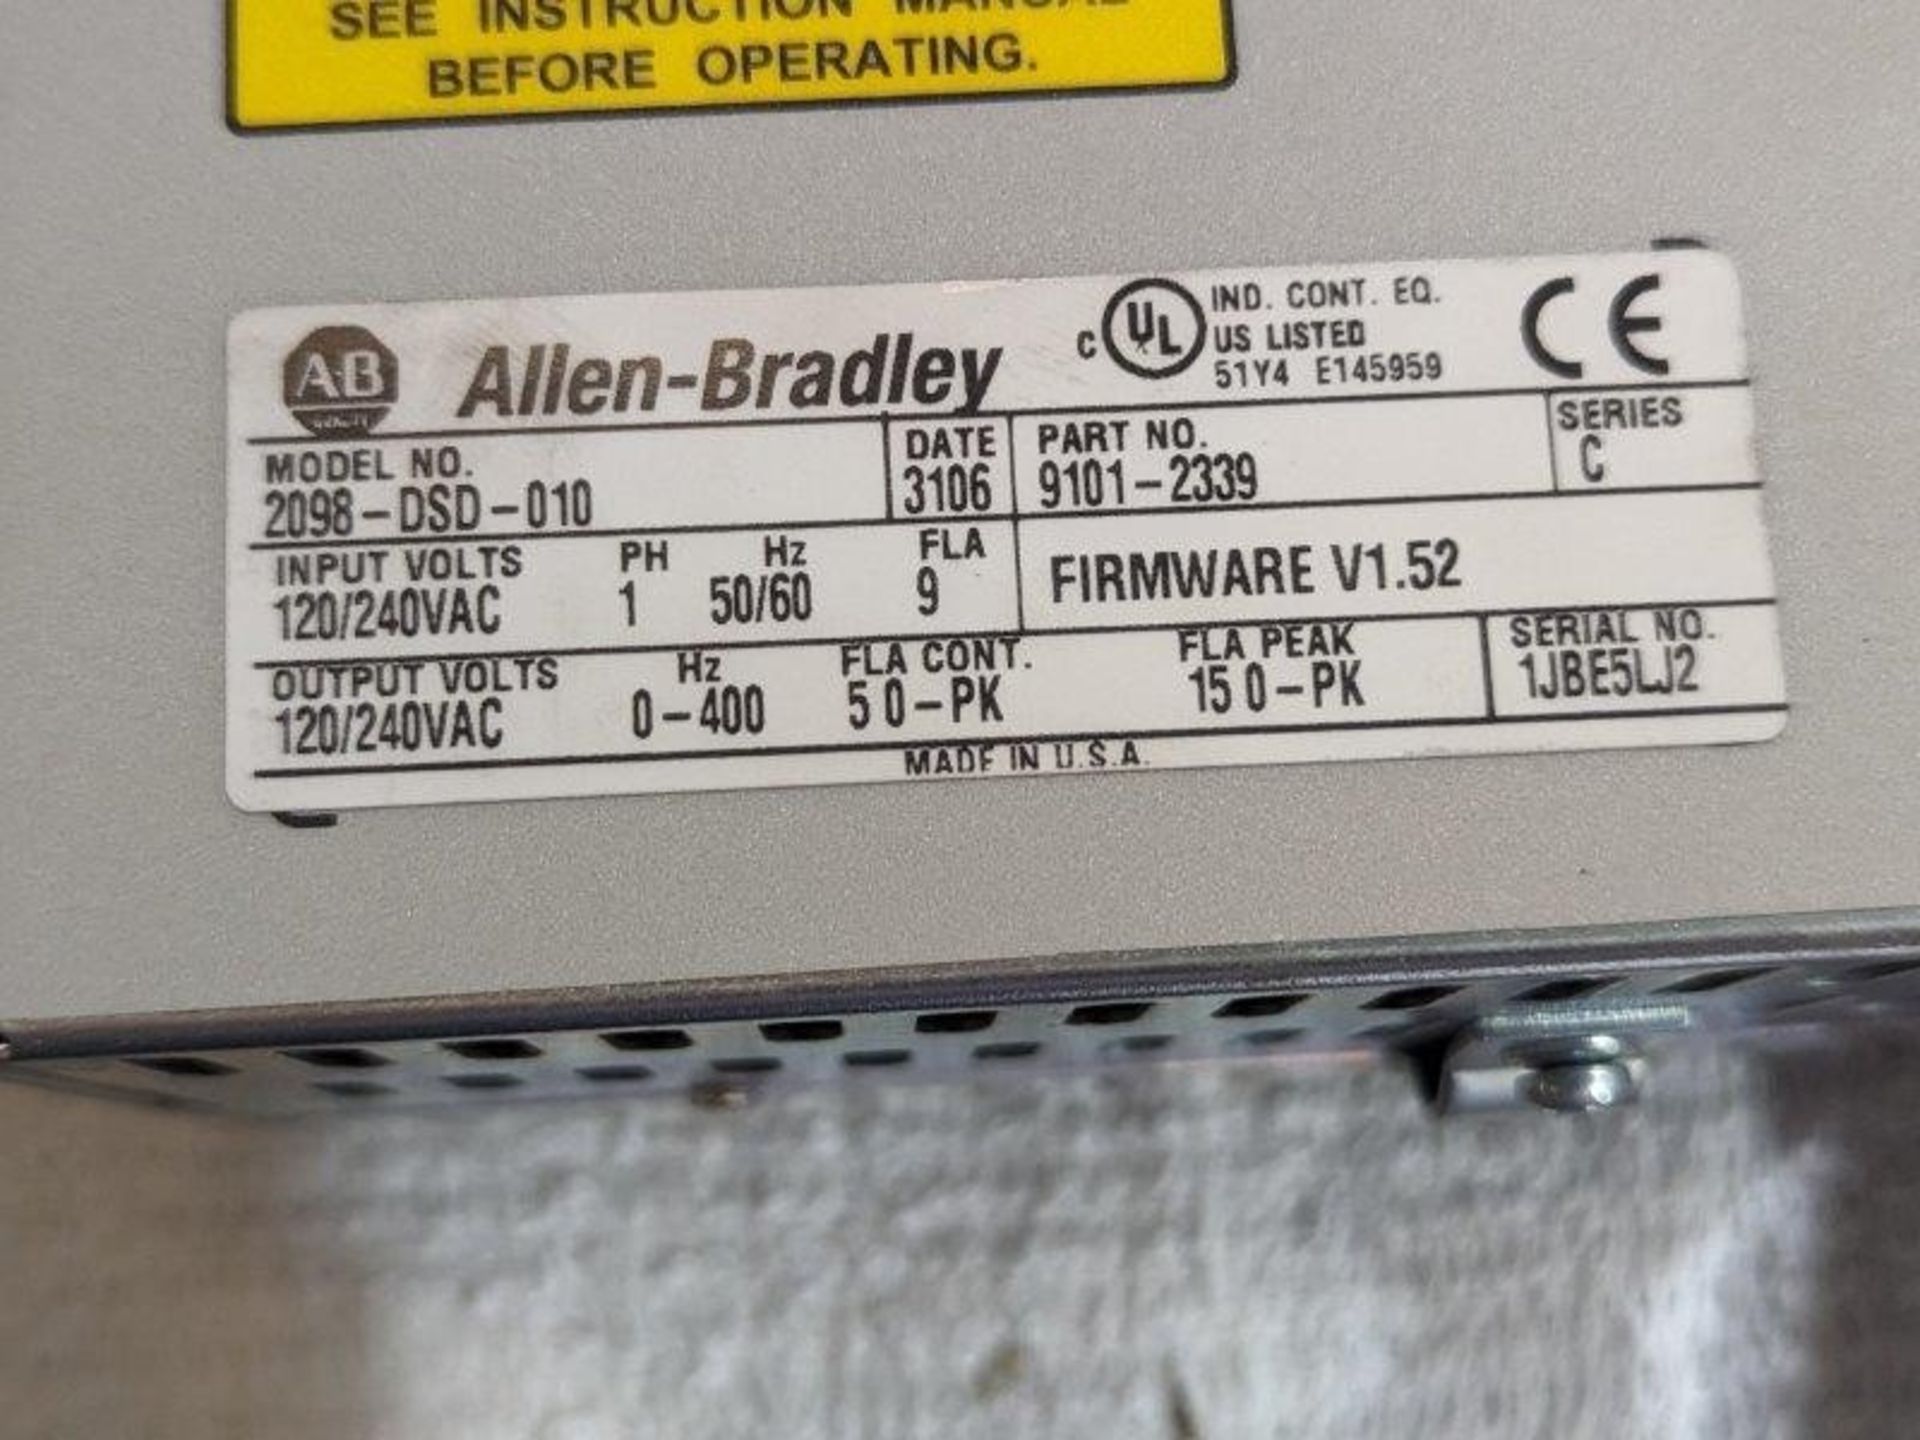 ALLEN-BRADLEY Ultra 3000 Servo Drives (Lot of 2); Model 2098-DSD-010 (Located Charleston, SC) - Image 4 of 4